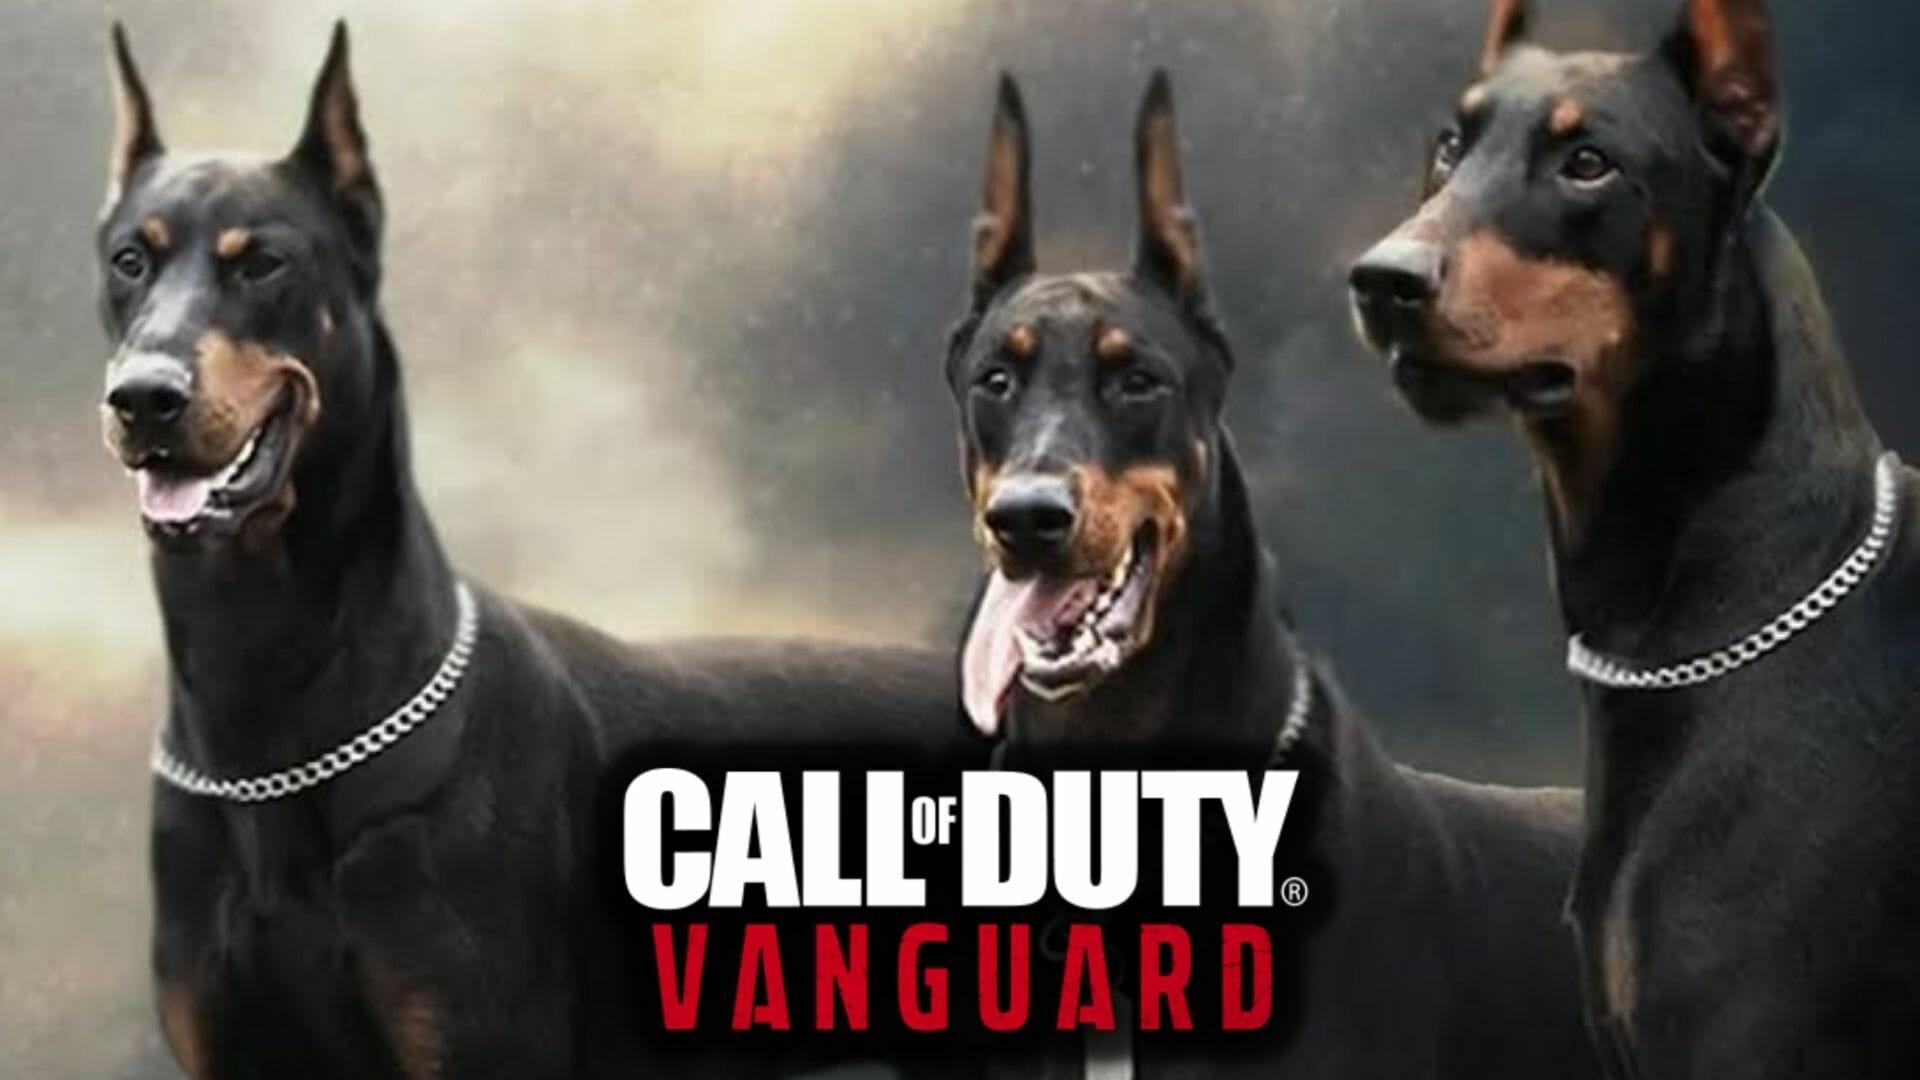 vanguard attack dogs